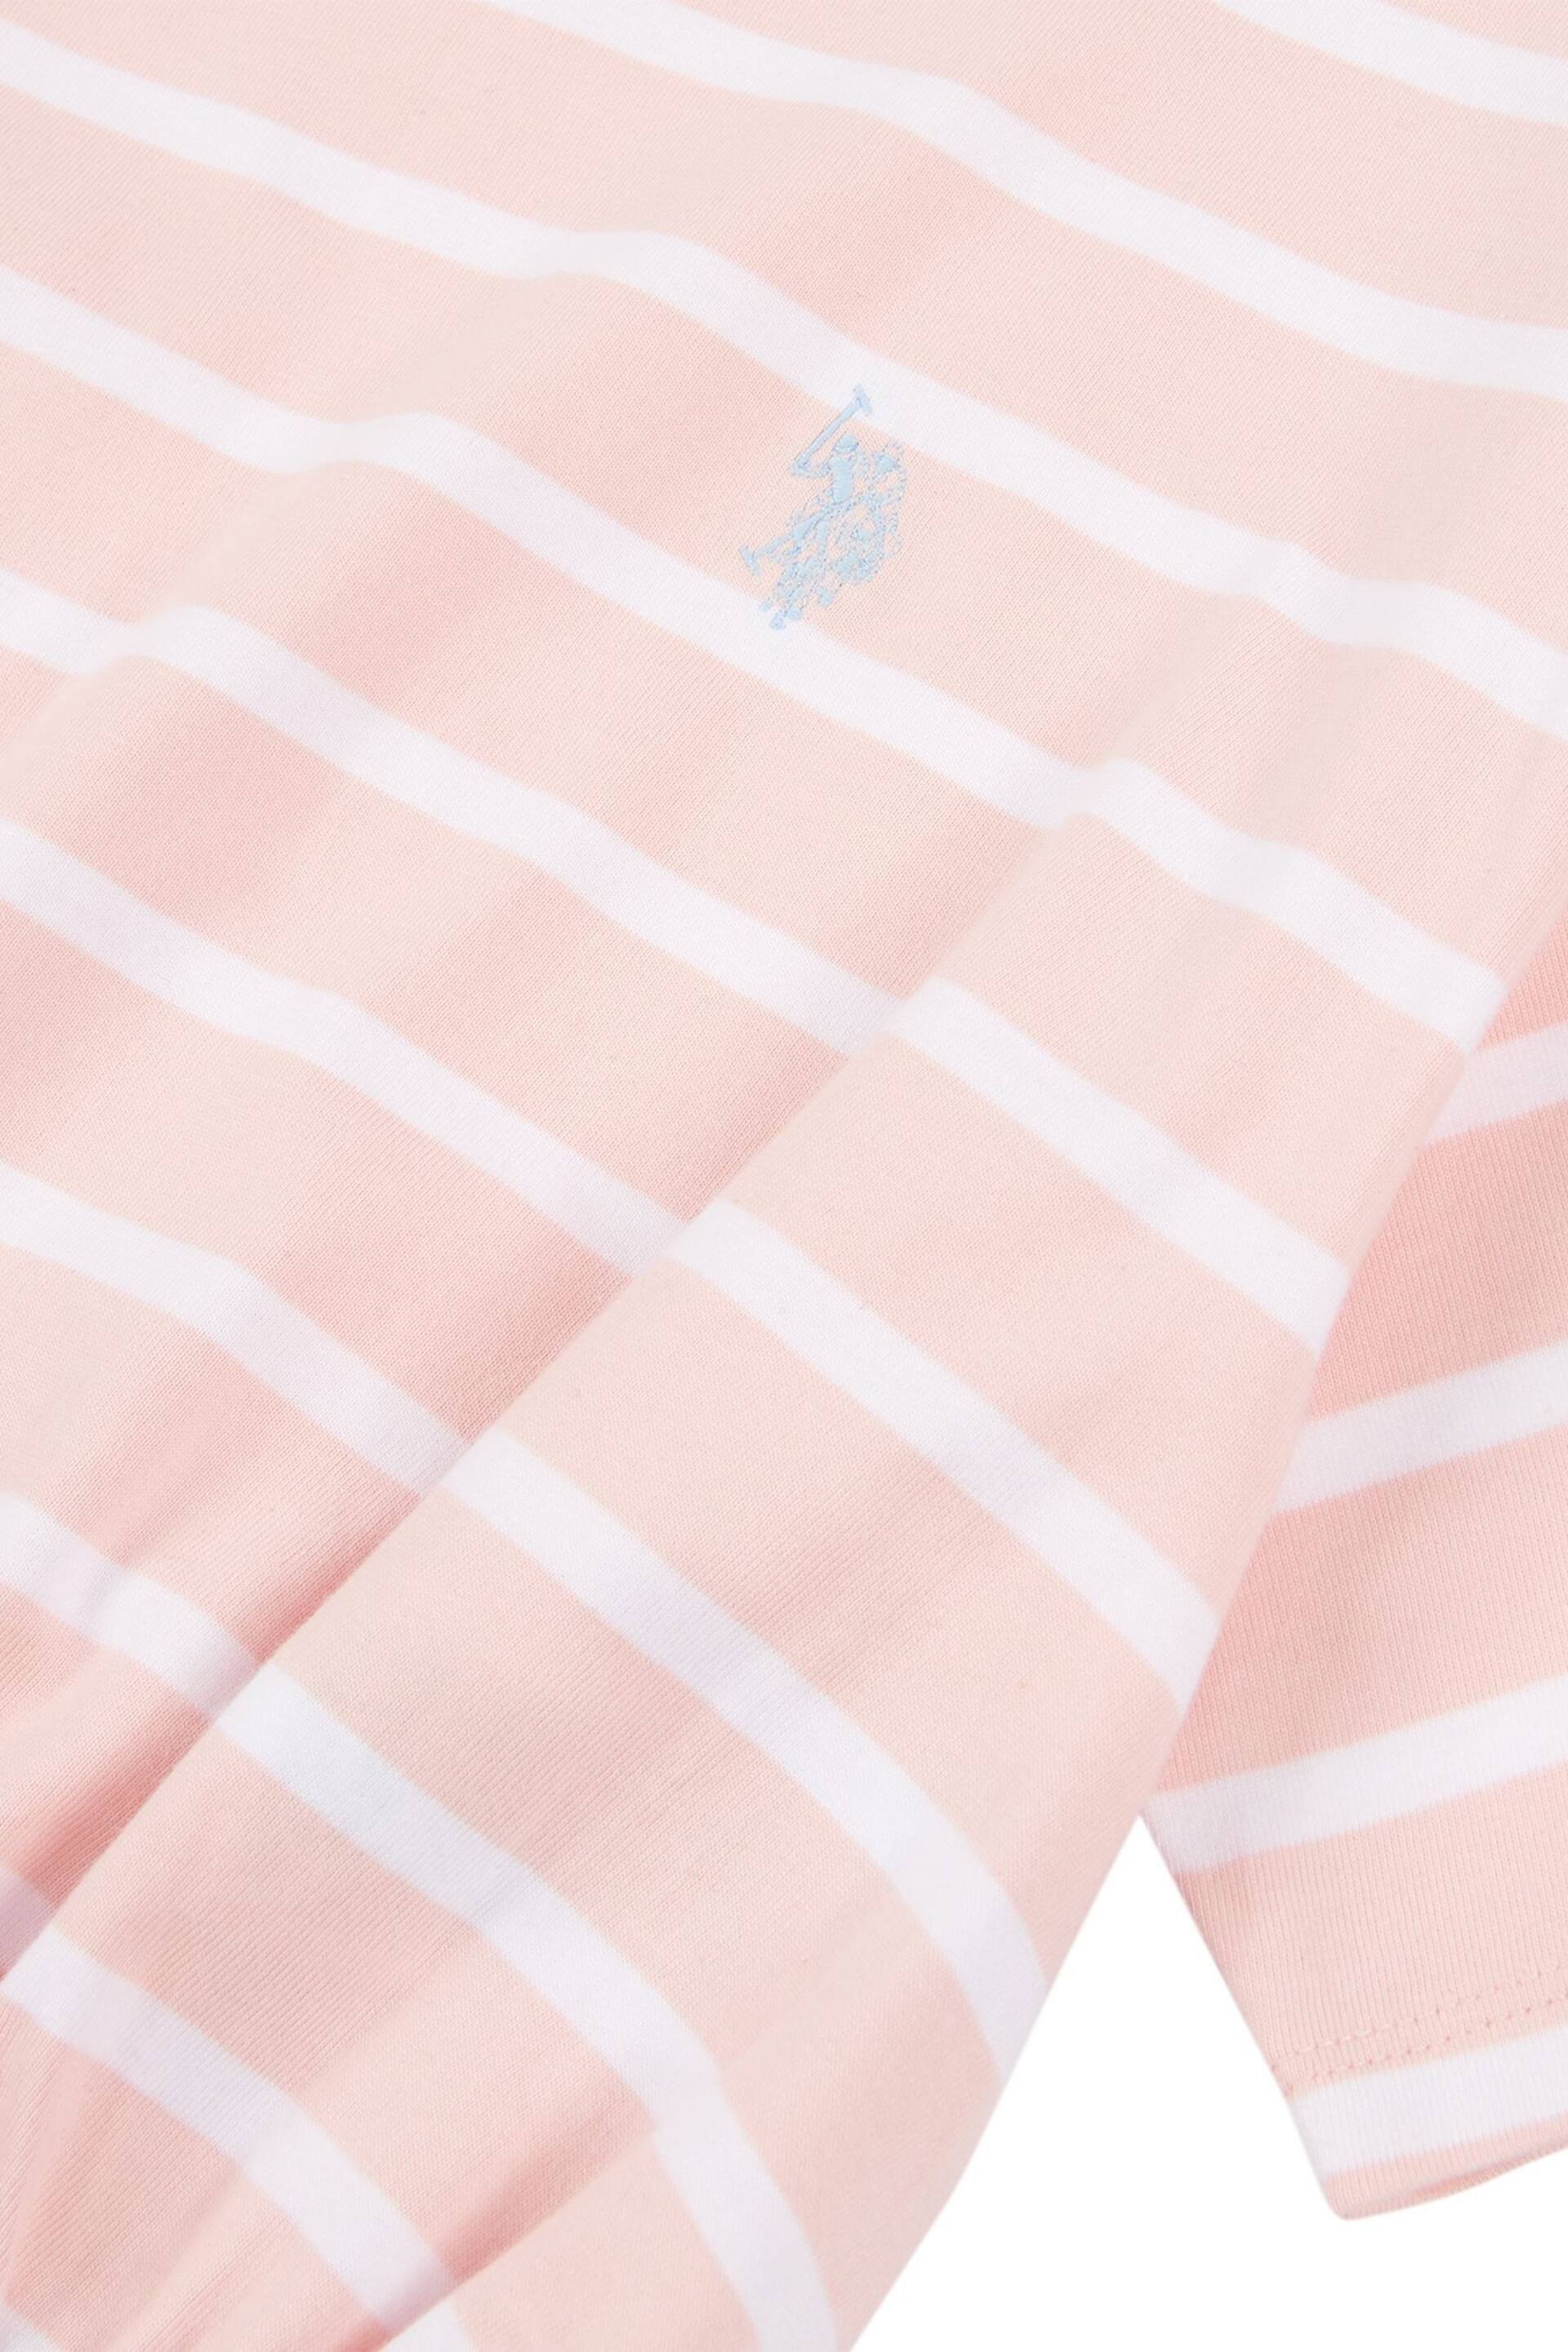 U.S. Polo Assn. Girls Pink Elastic Hem Striped T-Shirt - Image 6 of 6